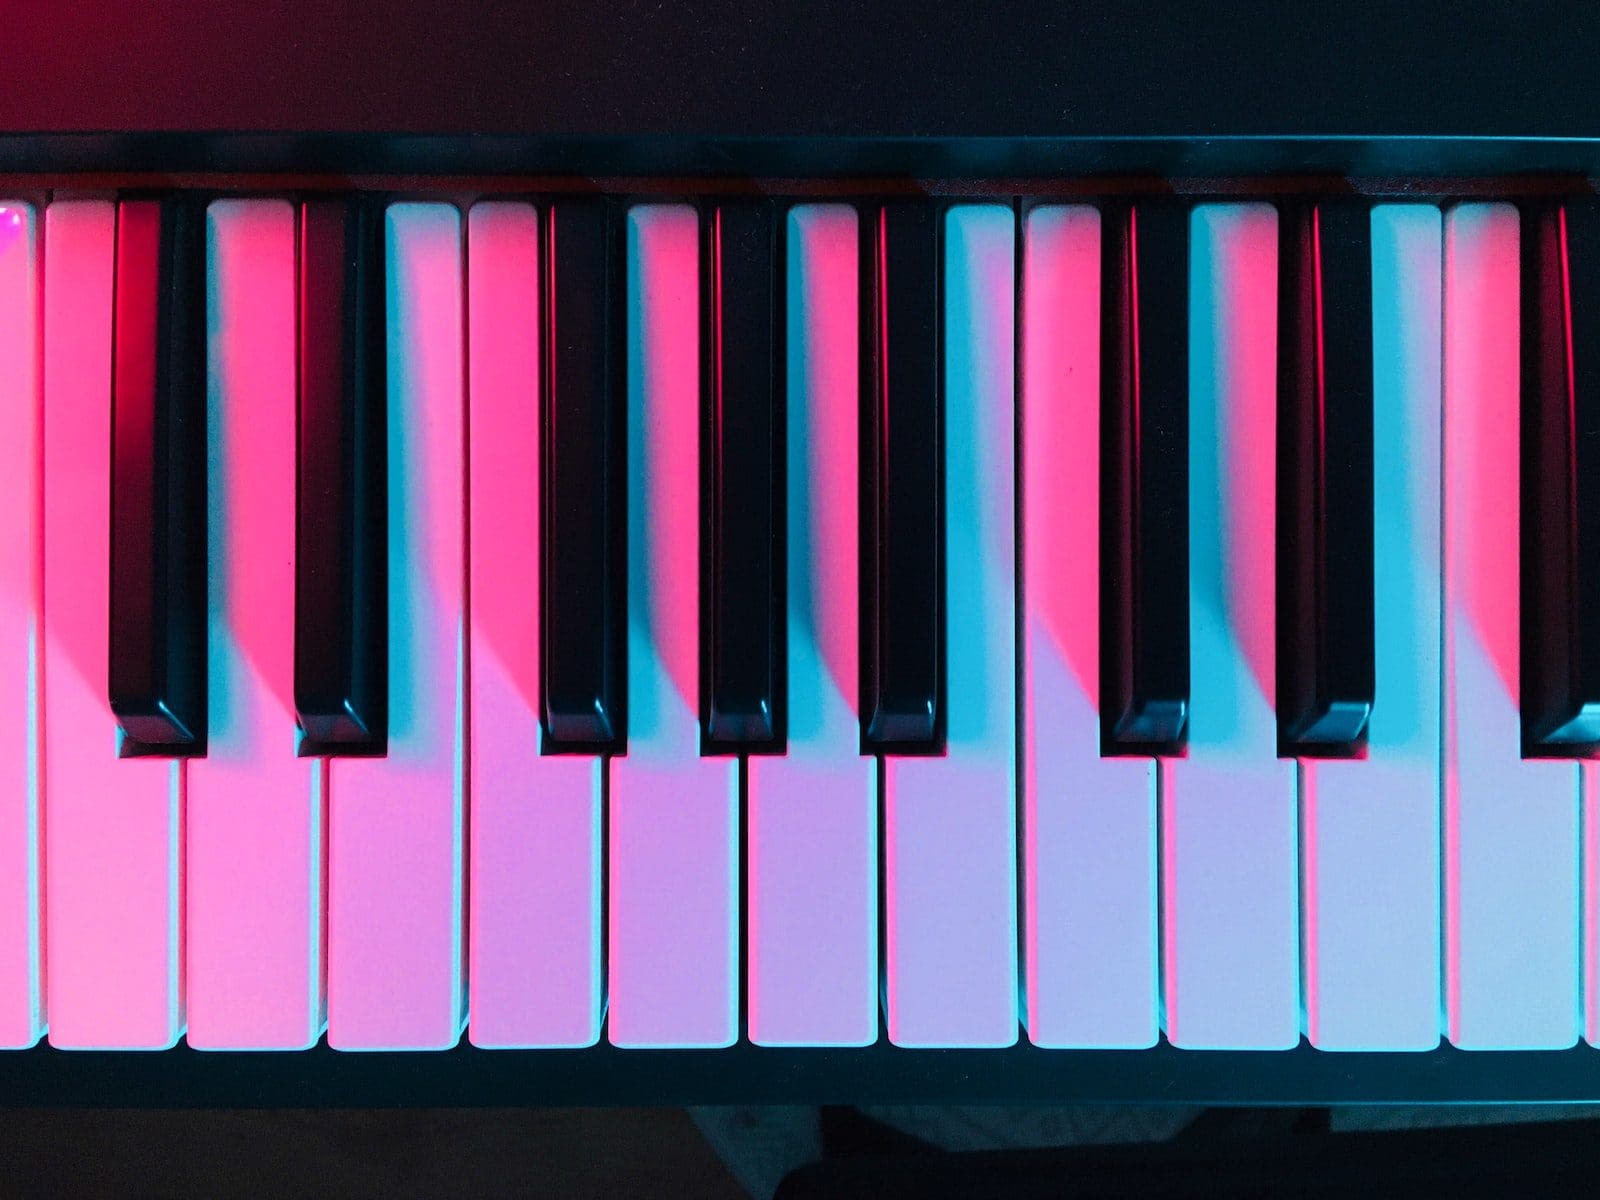 88 keys piano keyboards